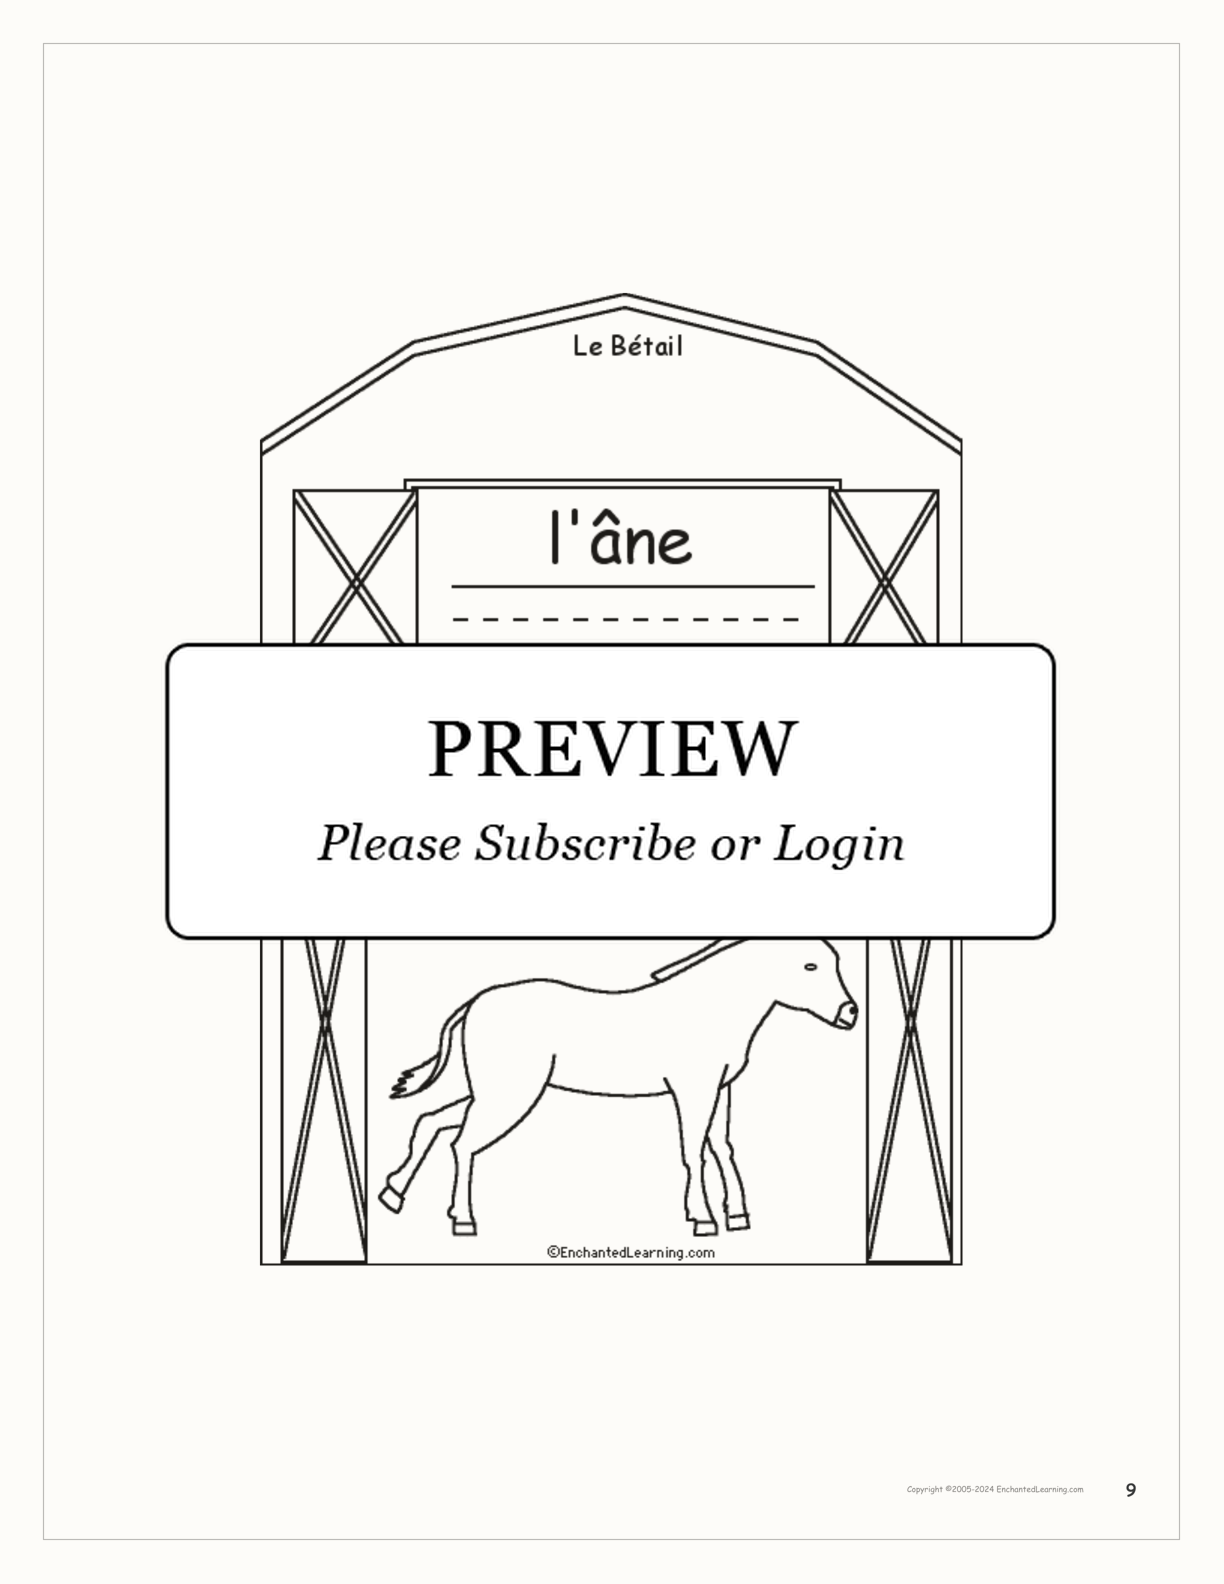 Bétail (Livestock) interactive printout page 9